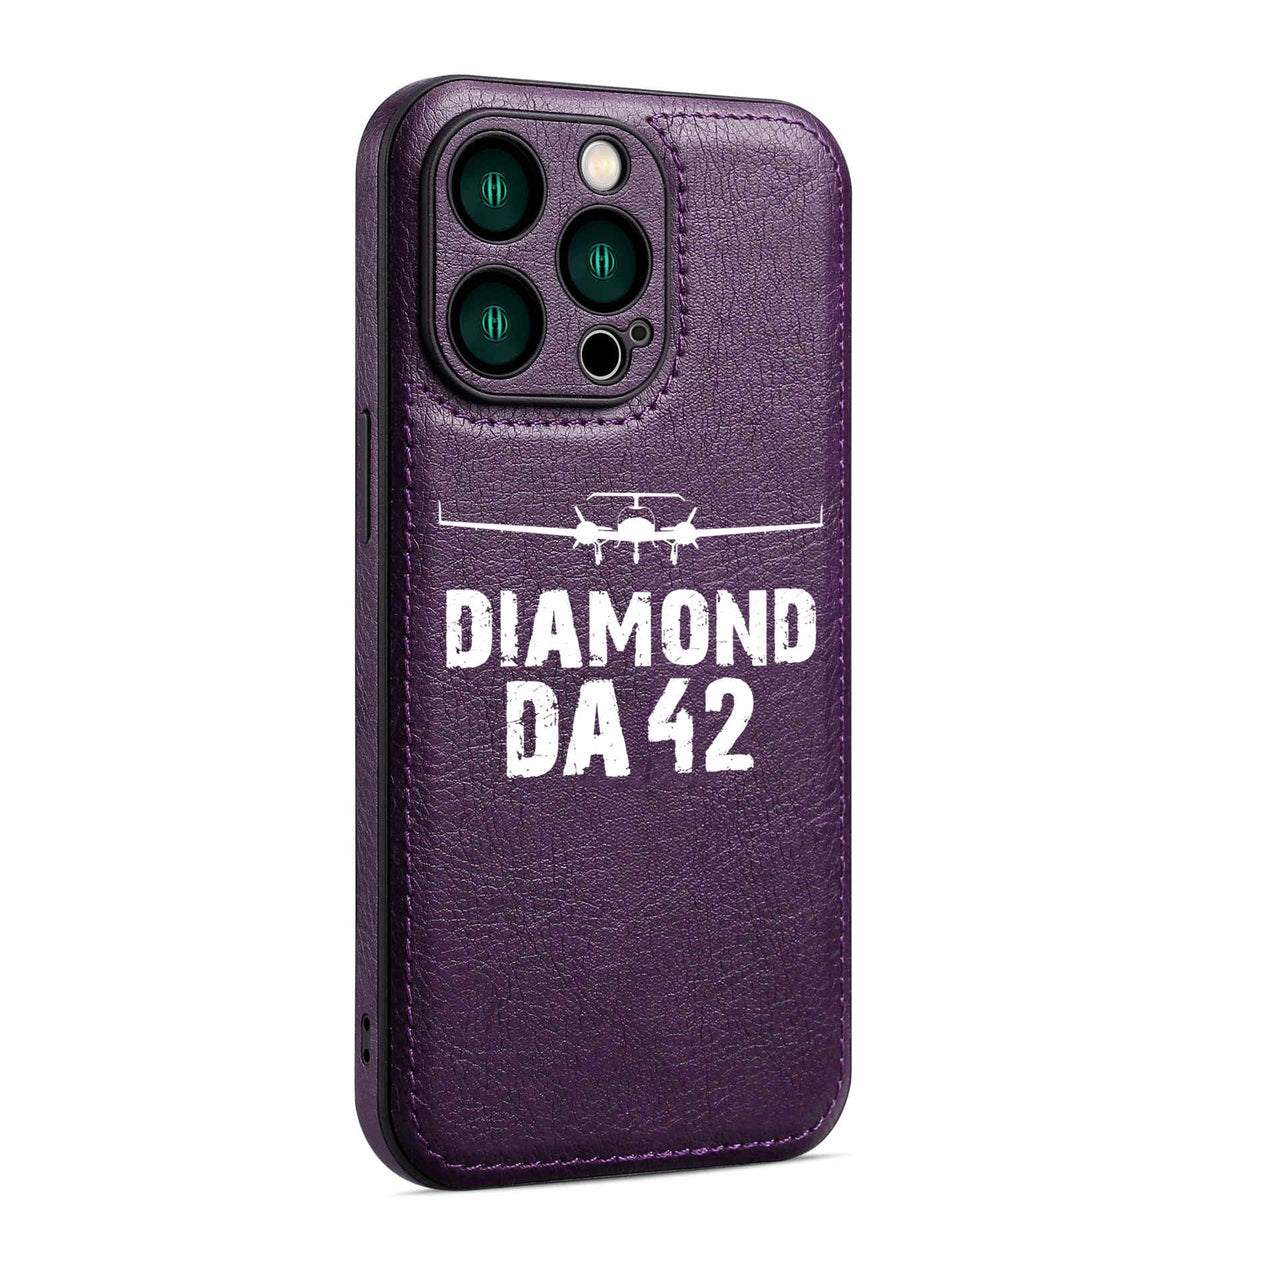 Diamond DA42 & Plane Designed Leather iPhone Cases